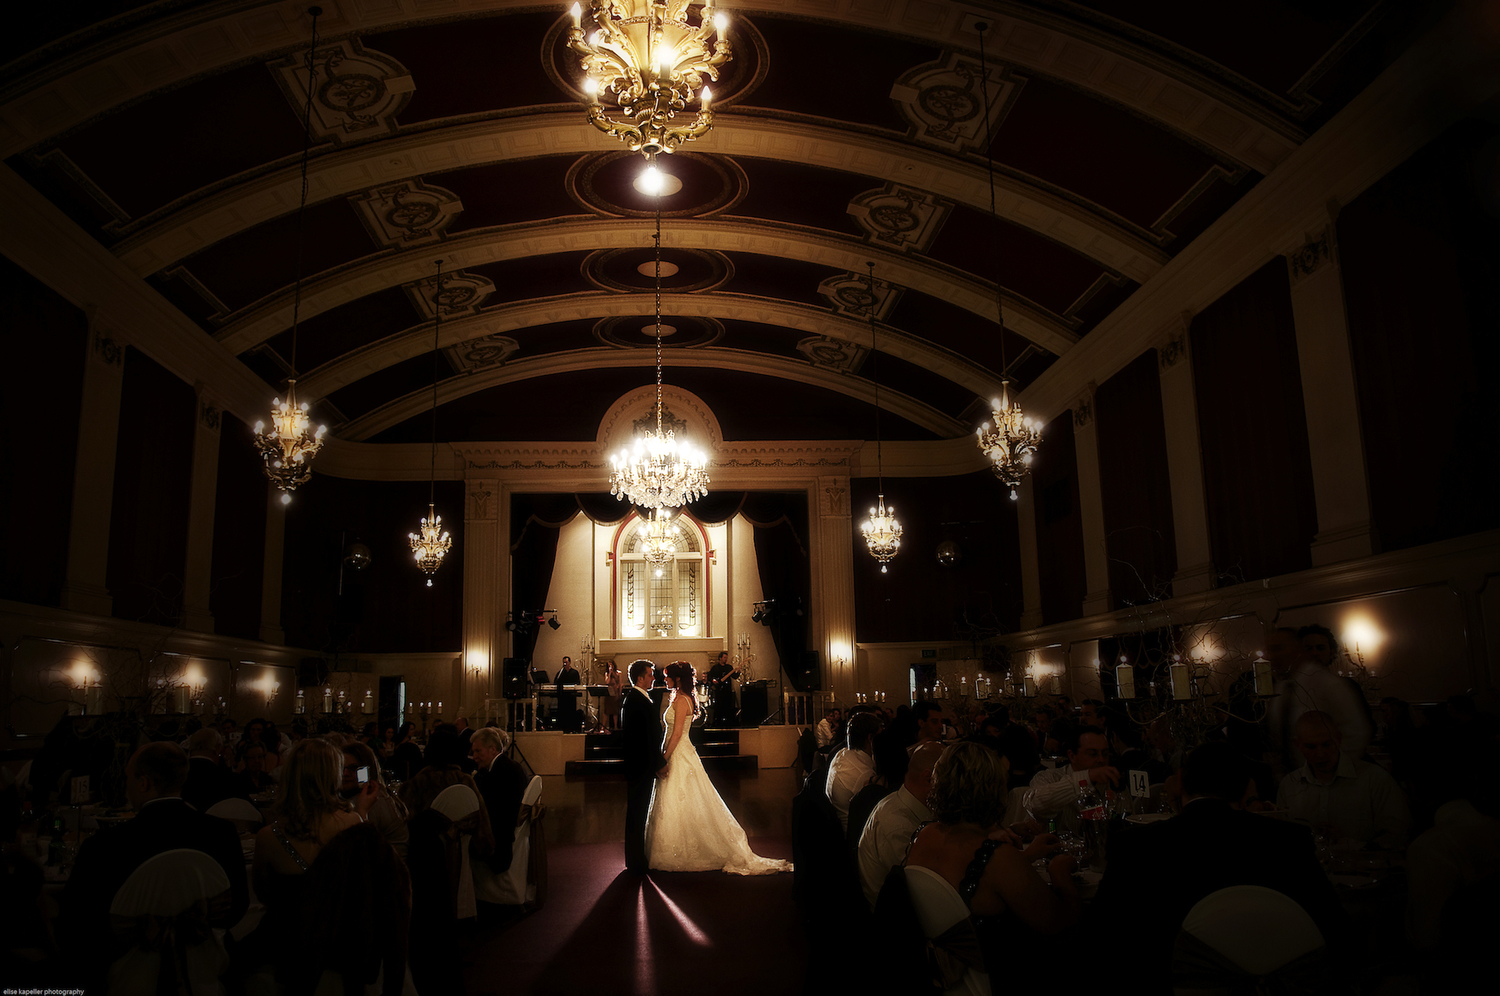 Image: The Regal Ballroom